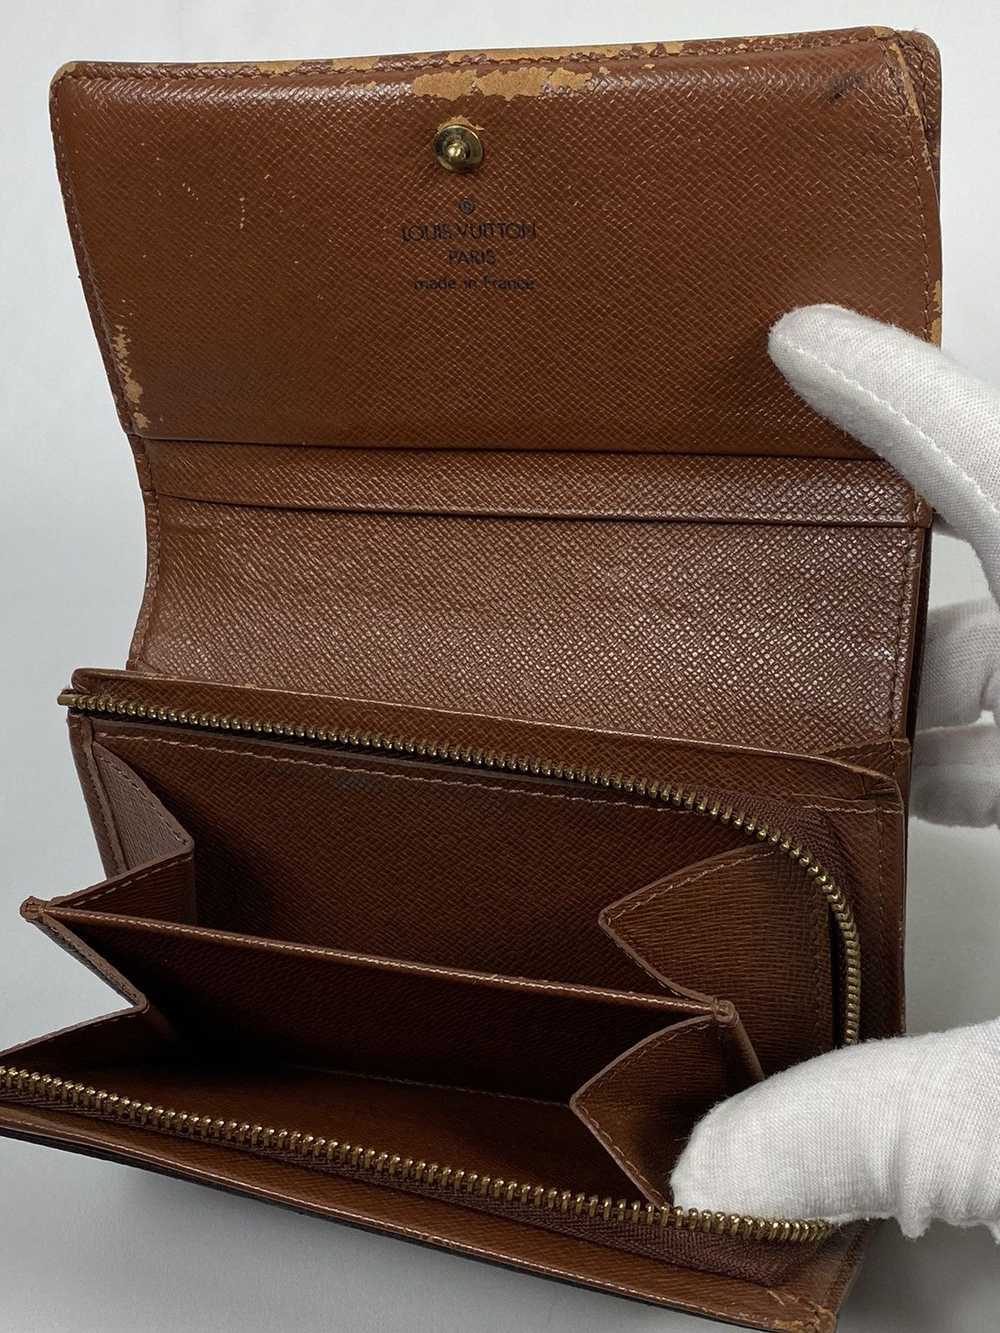 Louis Vuitton Monogram Zippy Wallet - image 4